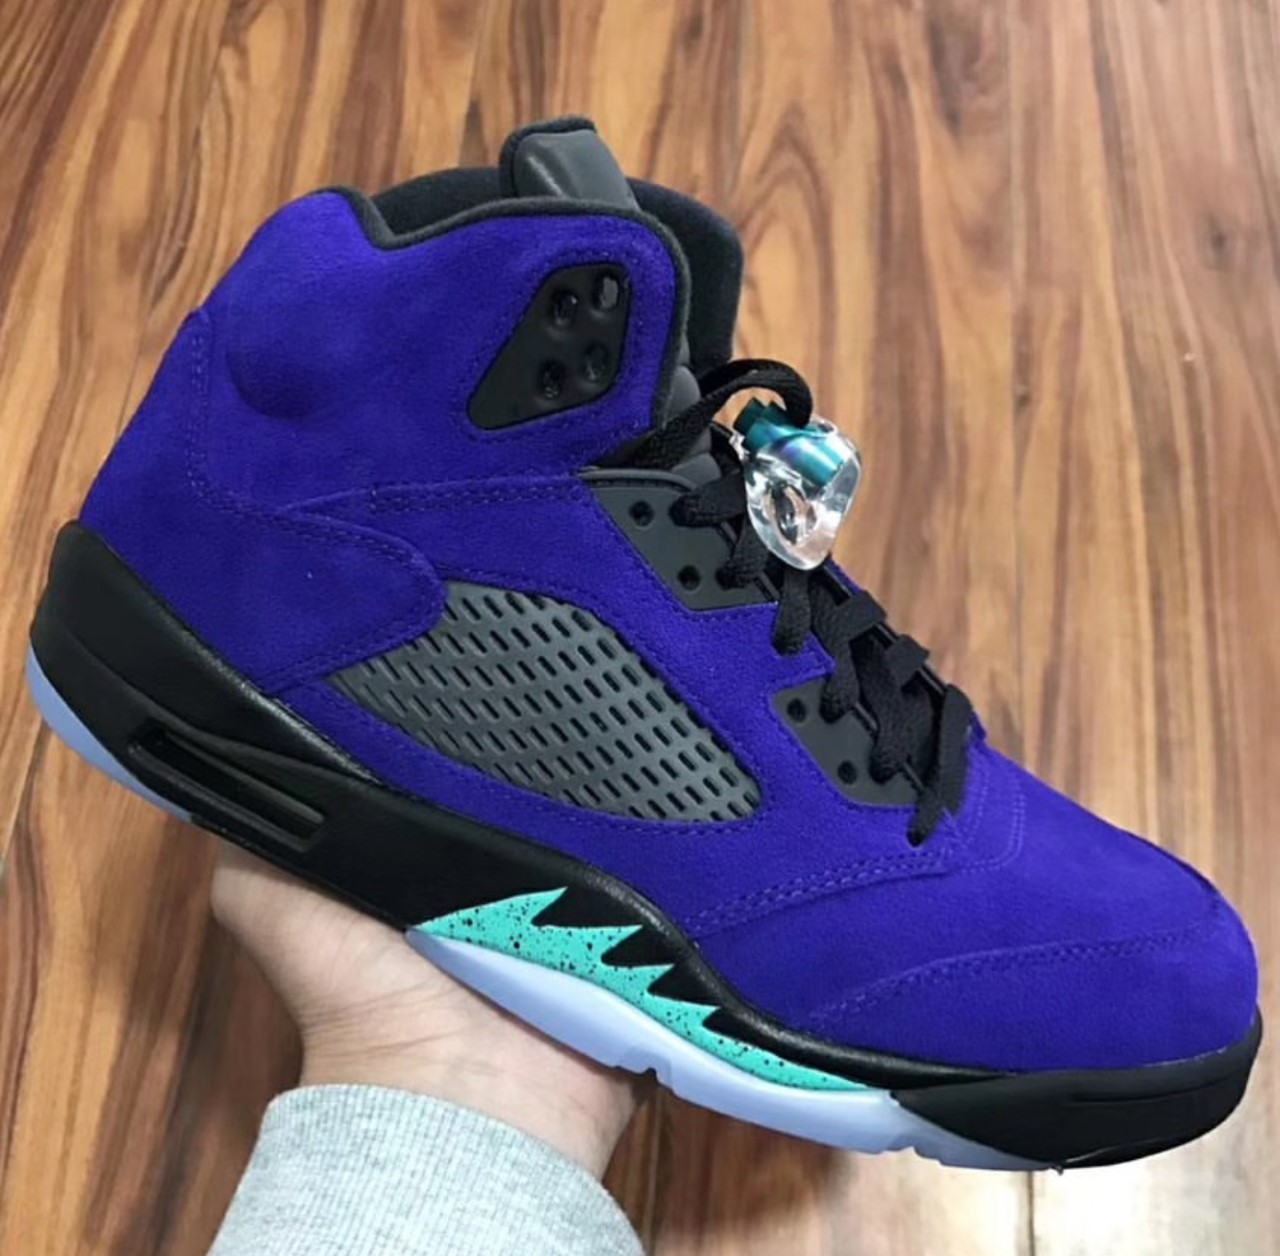 First Look At The Air Jordan 5 Retro "Alternate Grape" - The Sneaker Buzz